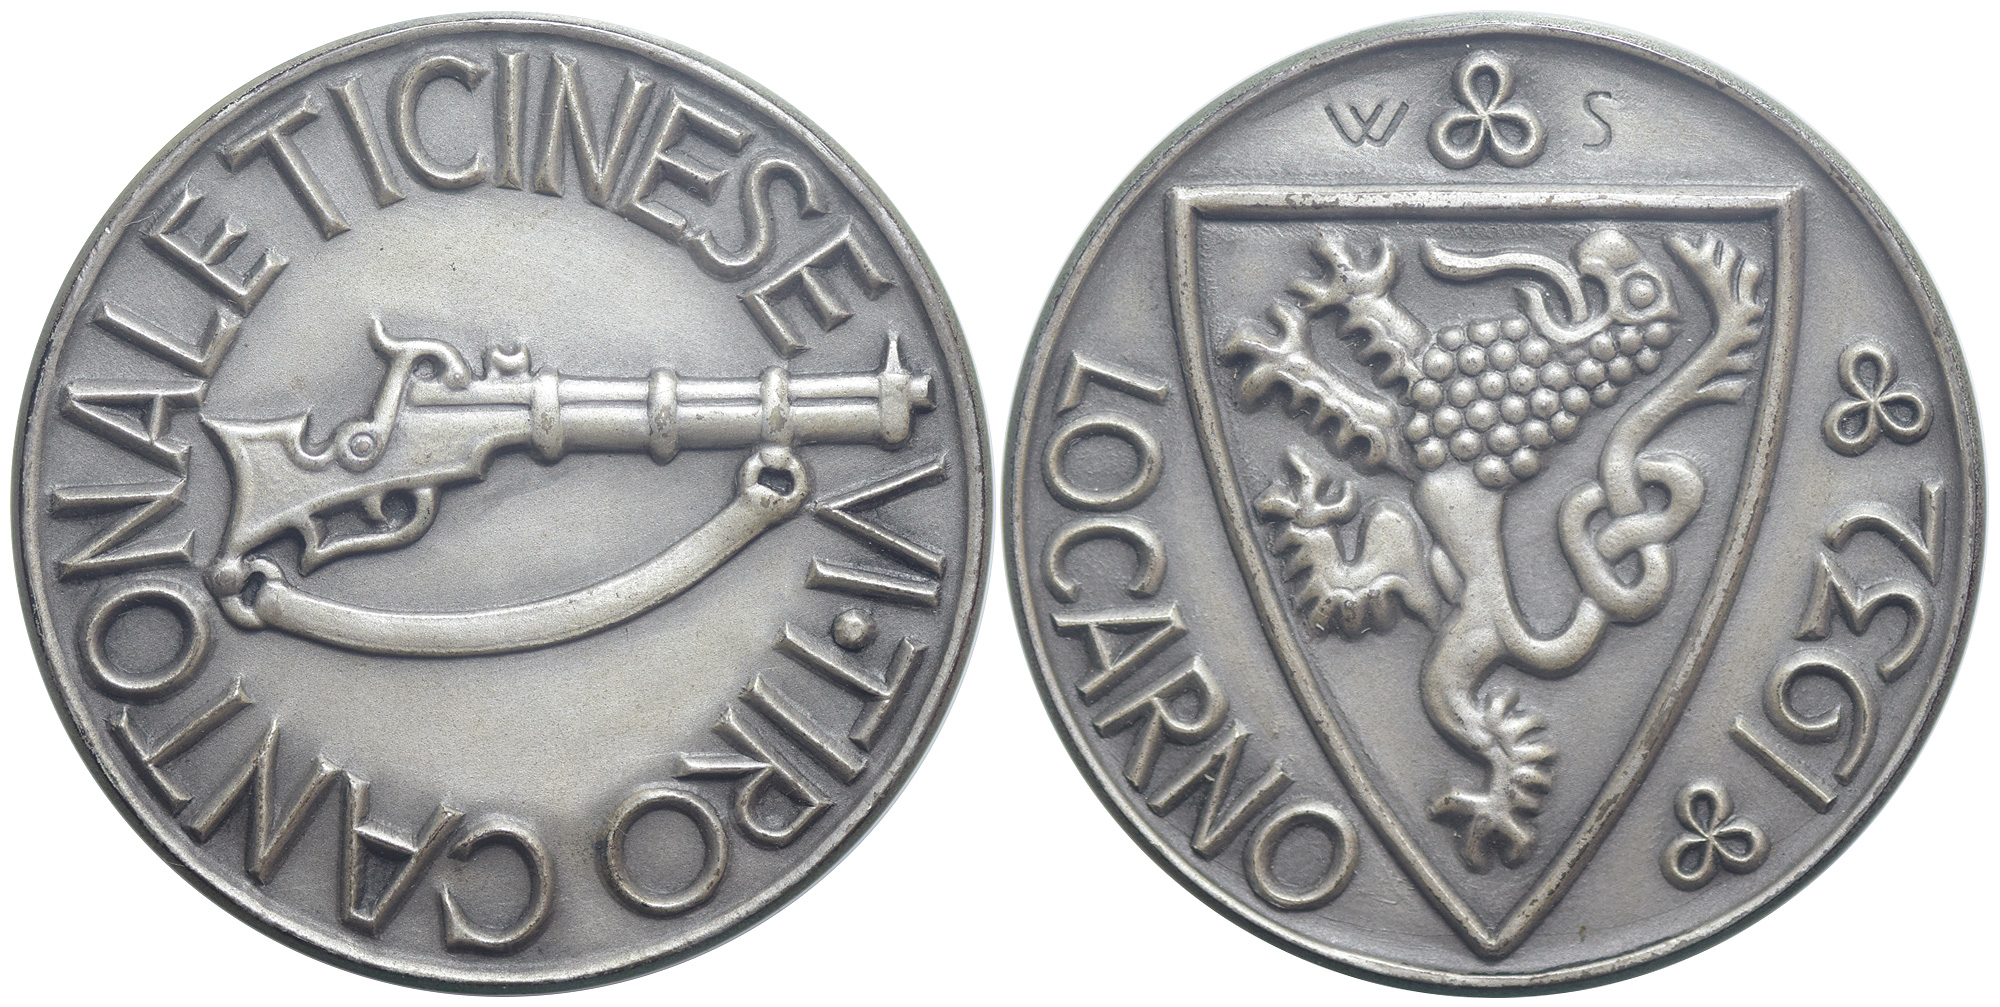 Medals Switzerland Ticino Medal 1932 